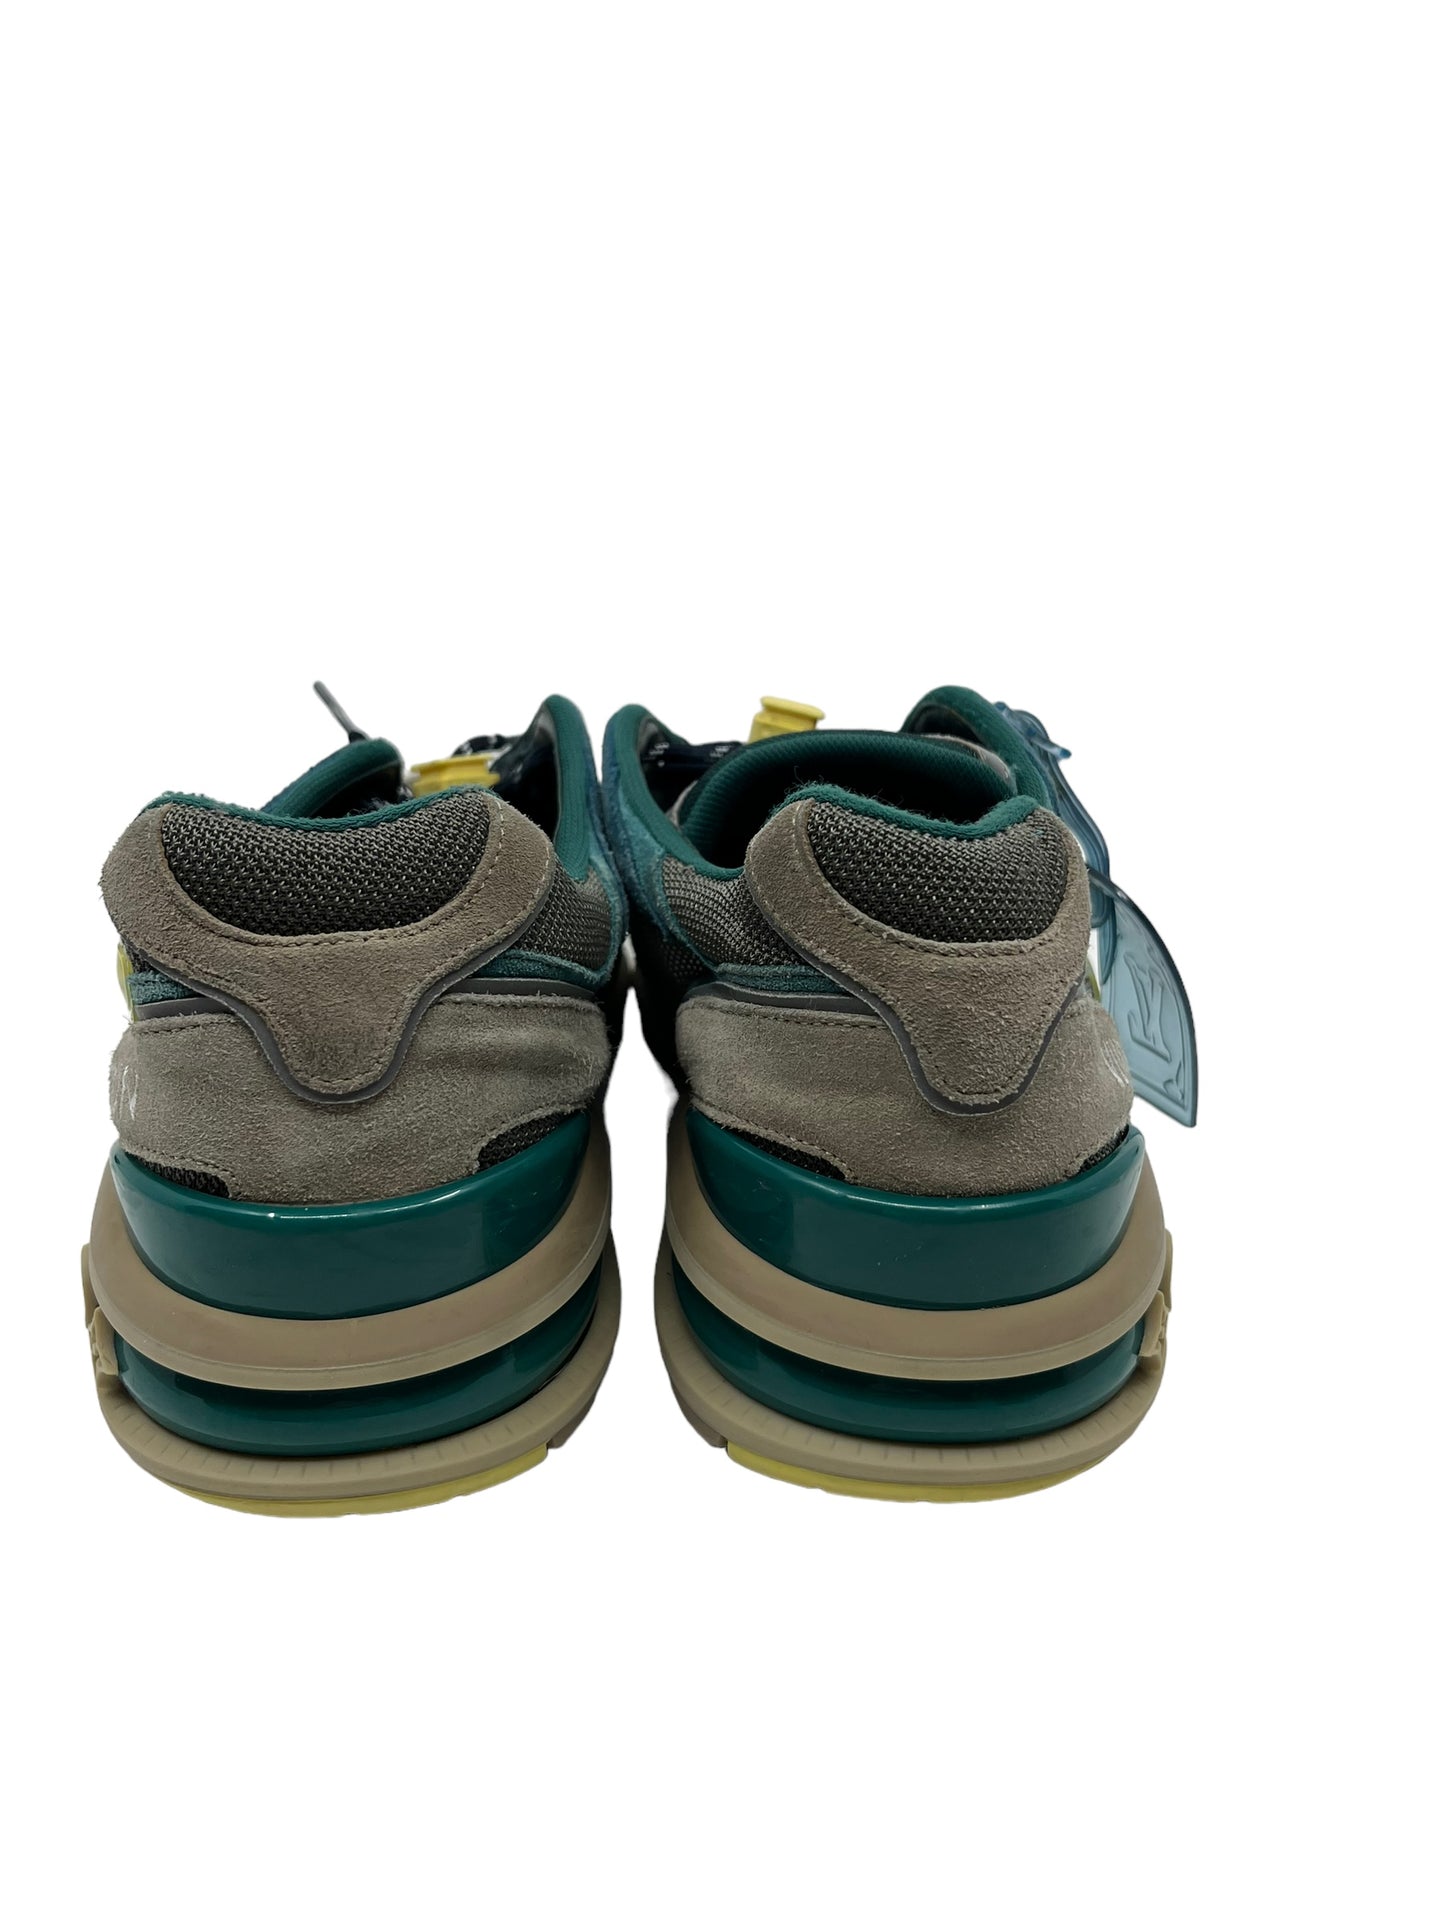 Louis Vuitton x Virgil Abloh Trail Sneakers Size 7.5LV  Pre-owned